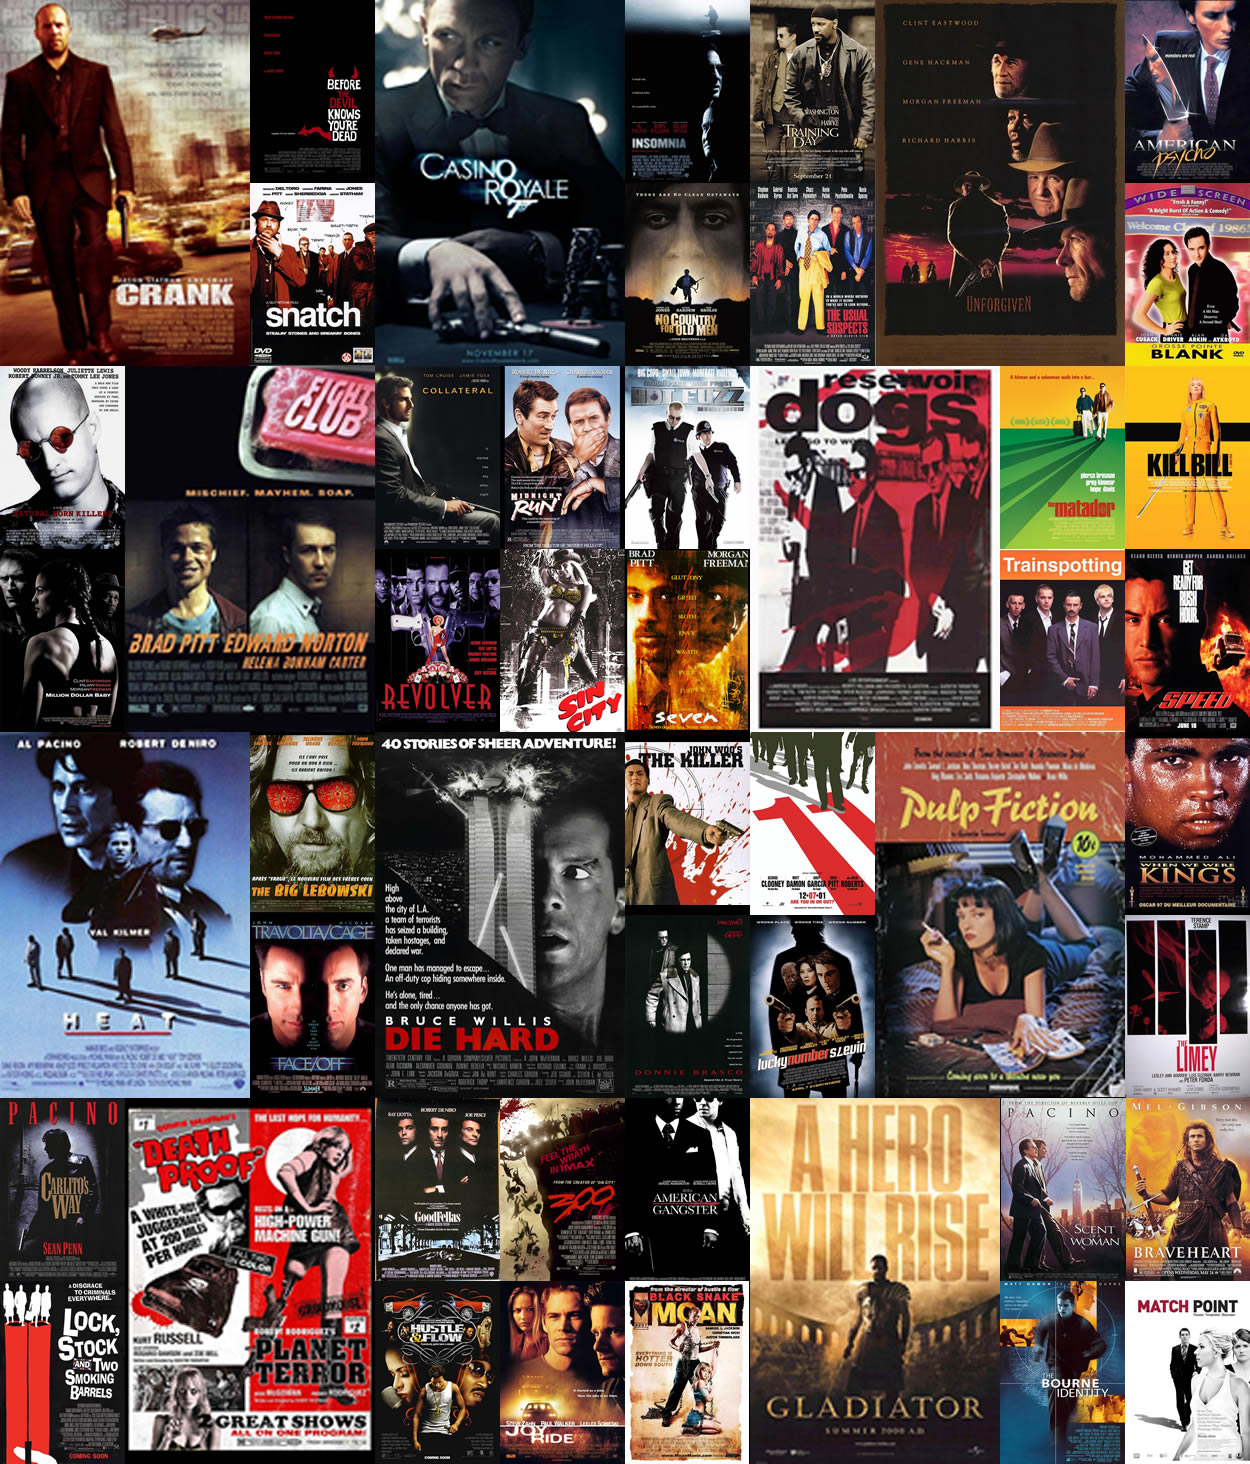 http://novenamovies.files.wordpress.com/2011/09/50-guy-movies-collage.jpg